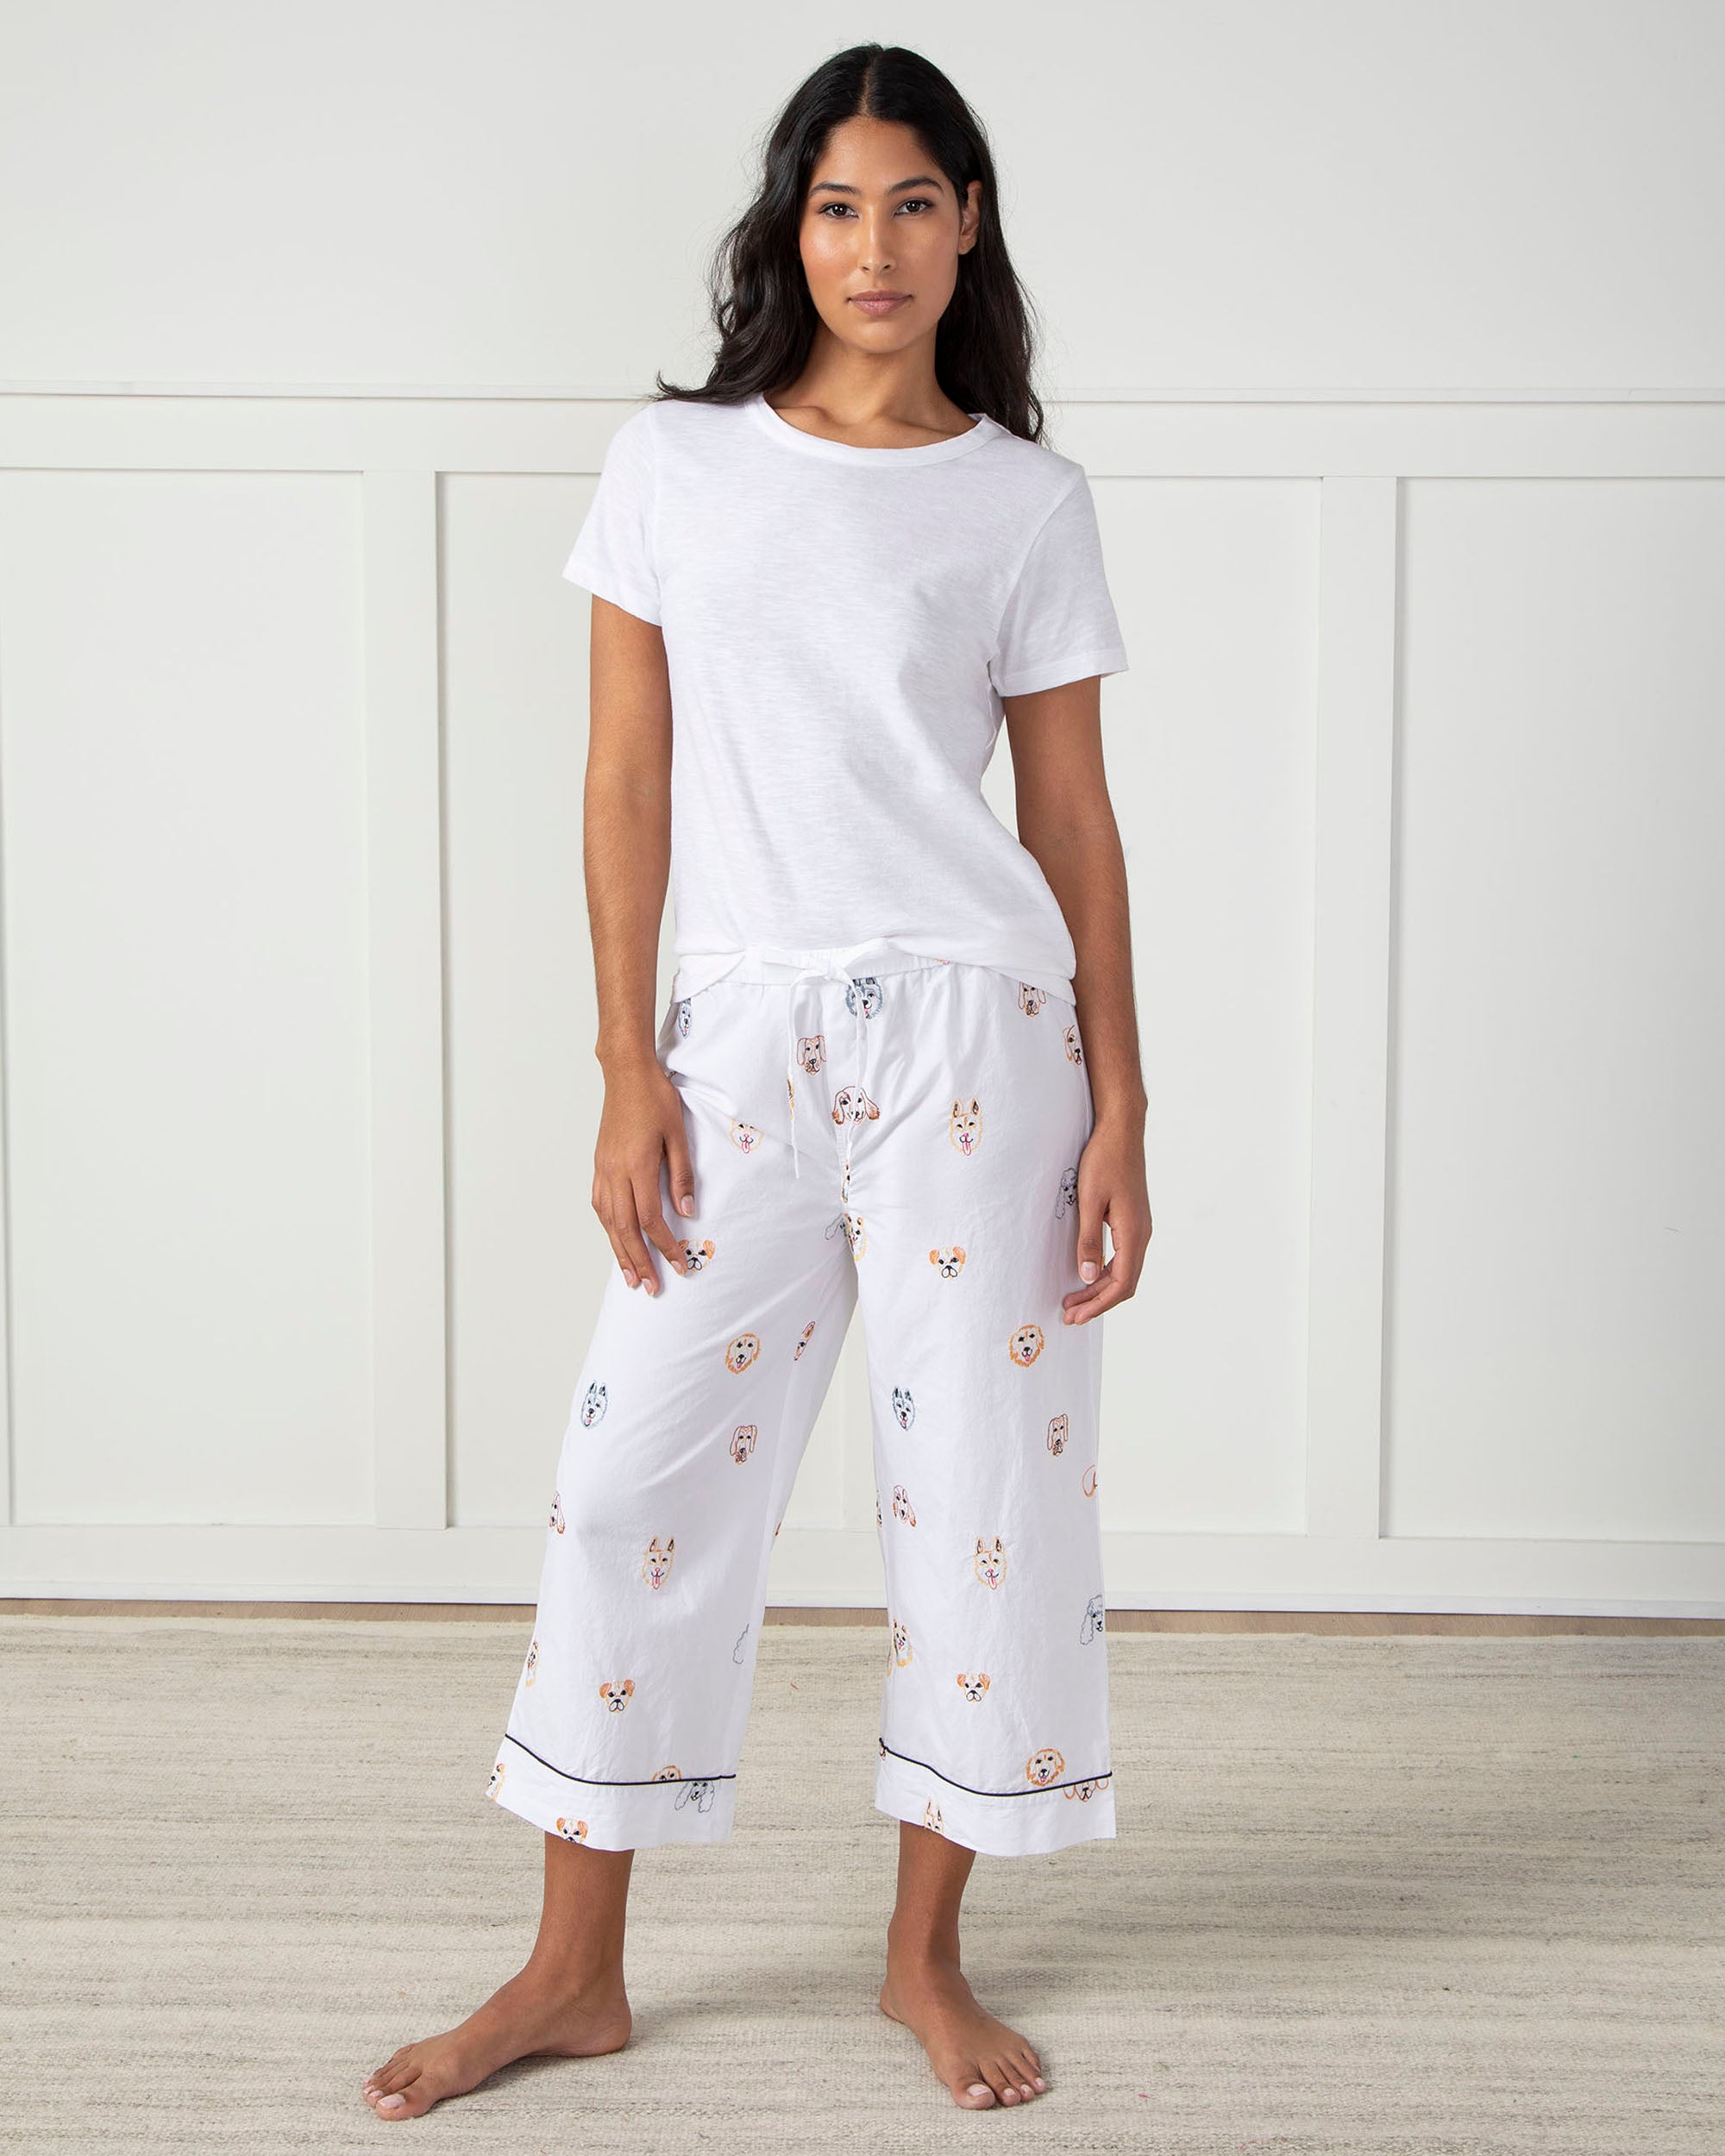 TINFL Men's Lounge Cotton Pajama Pj Bottoms Pants MLP-TP016020023-Navygrey  S at Amazon Men's Clothing store